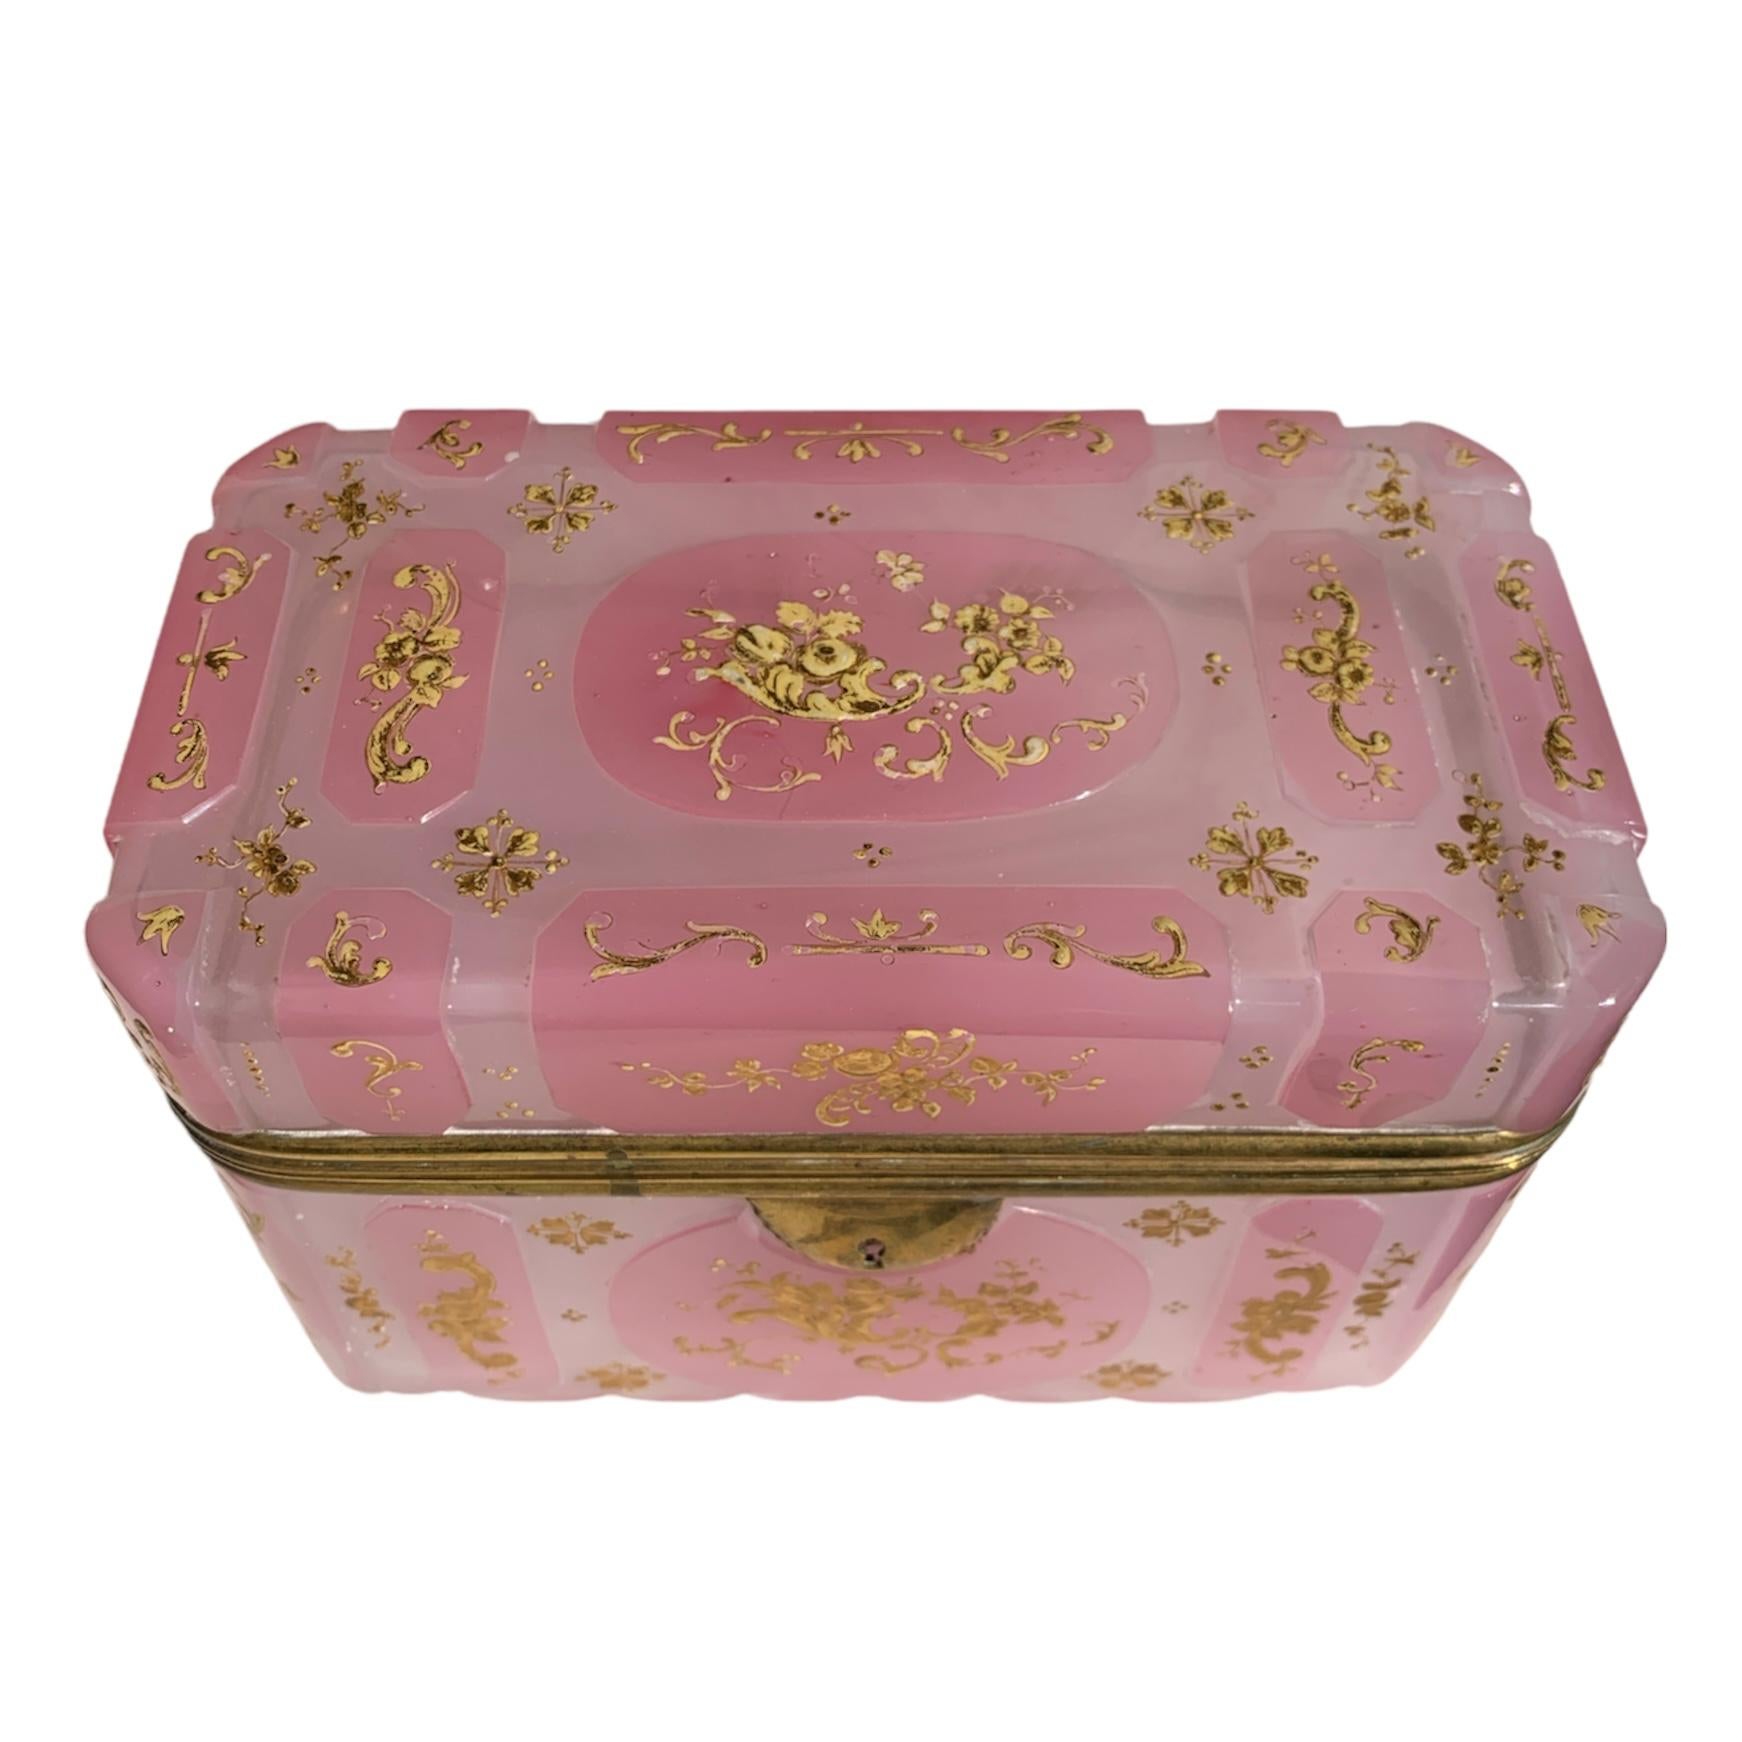 European Antique Bohemian Pink Opaline Enameled Glass Casket Box, 19th Century